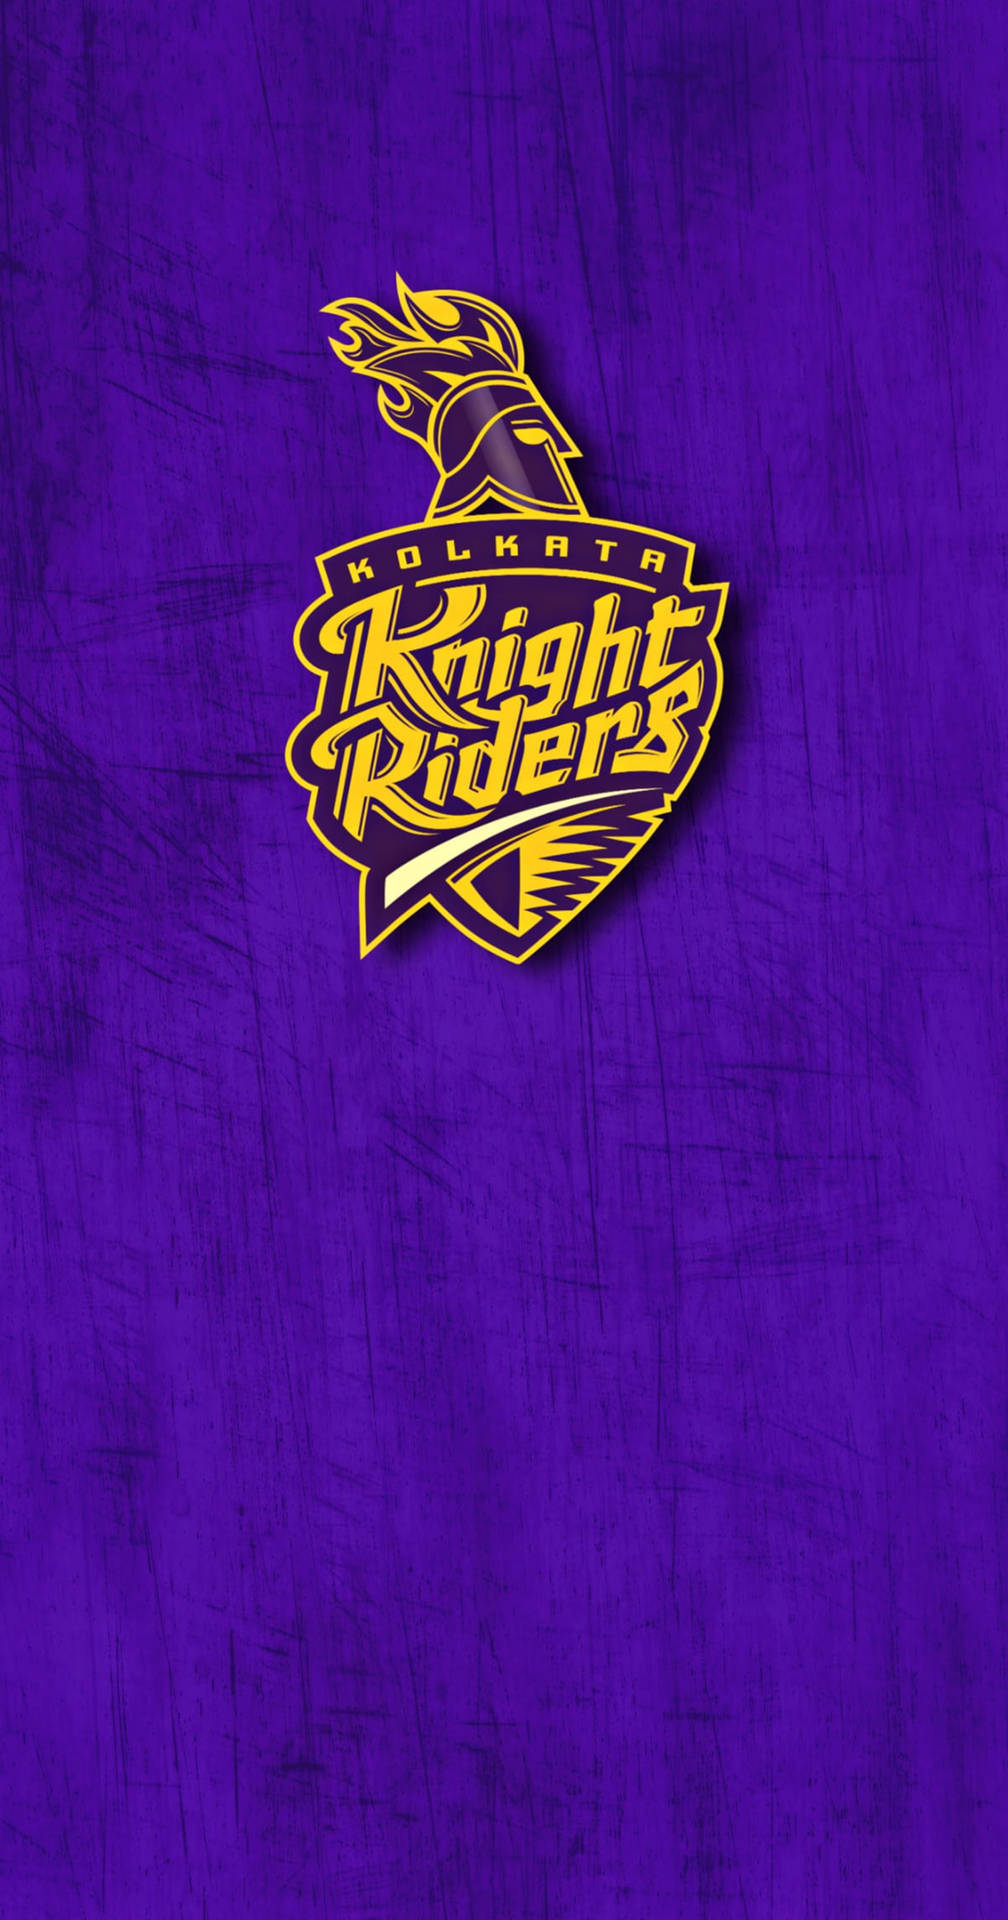 Kolkata Knight Riders Violet Aesthetic Background